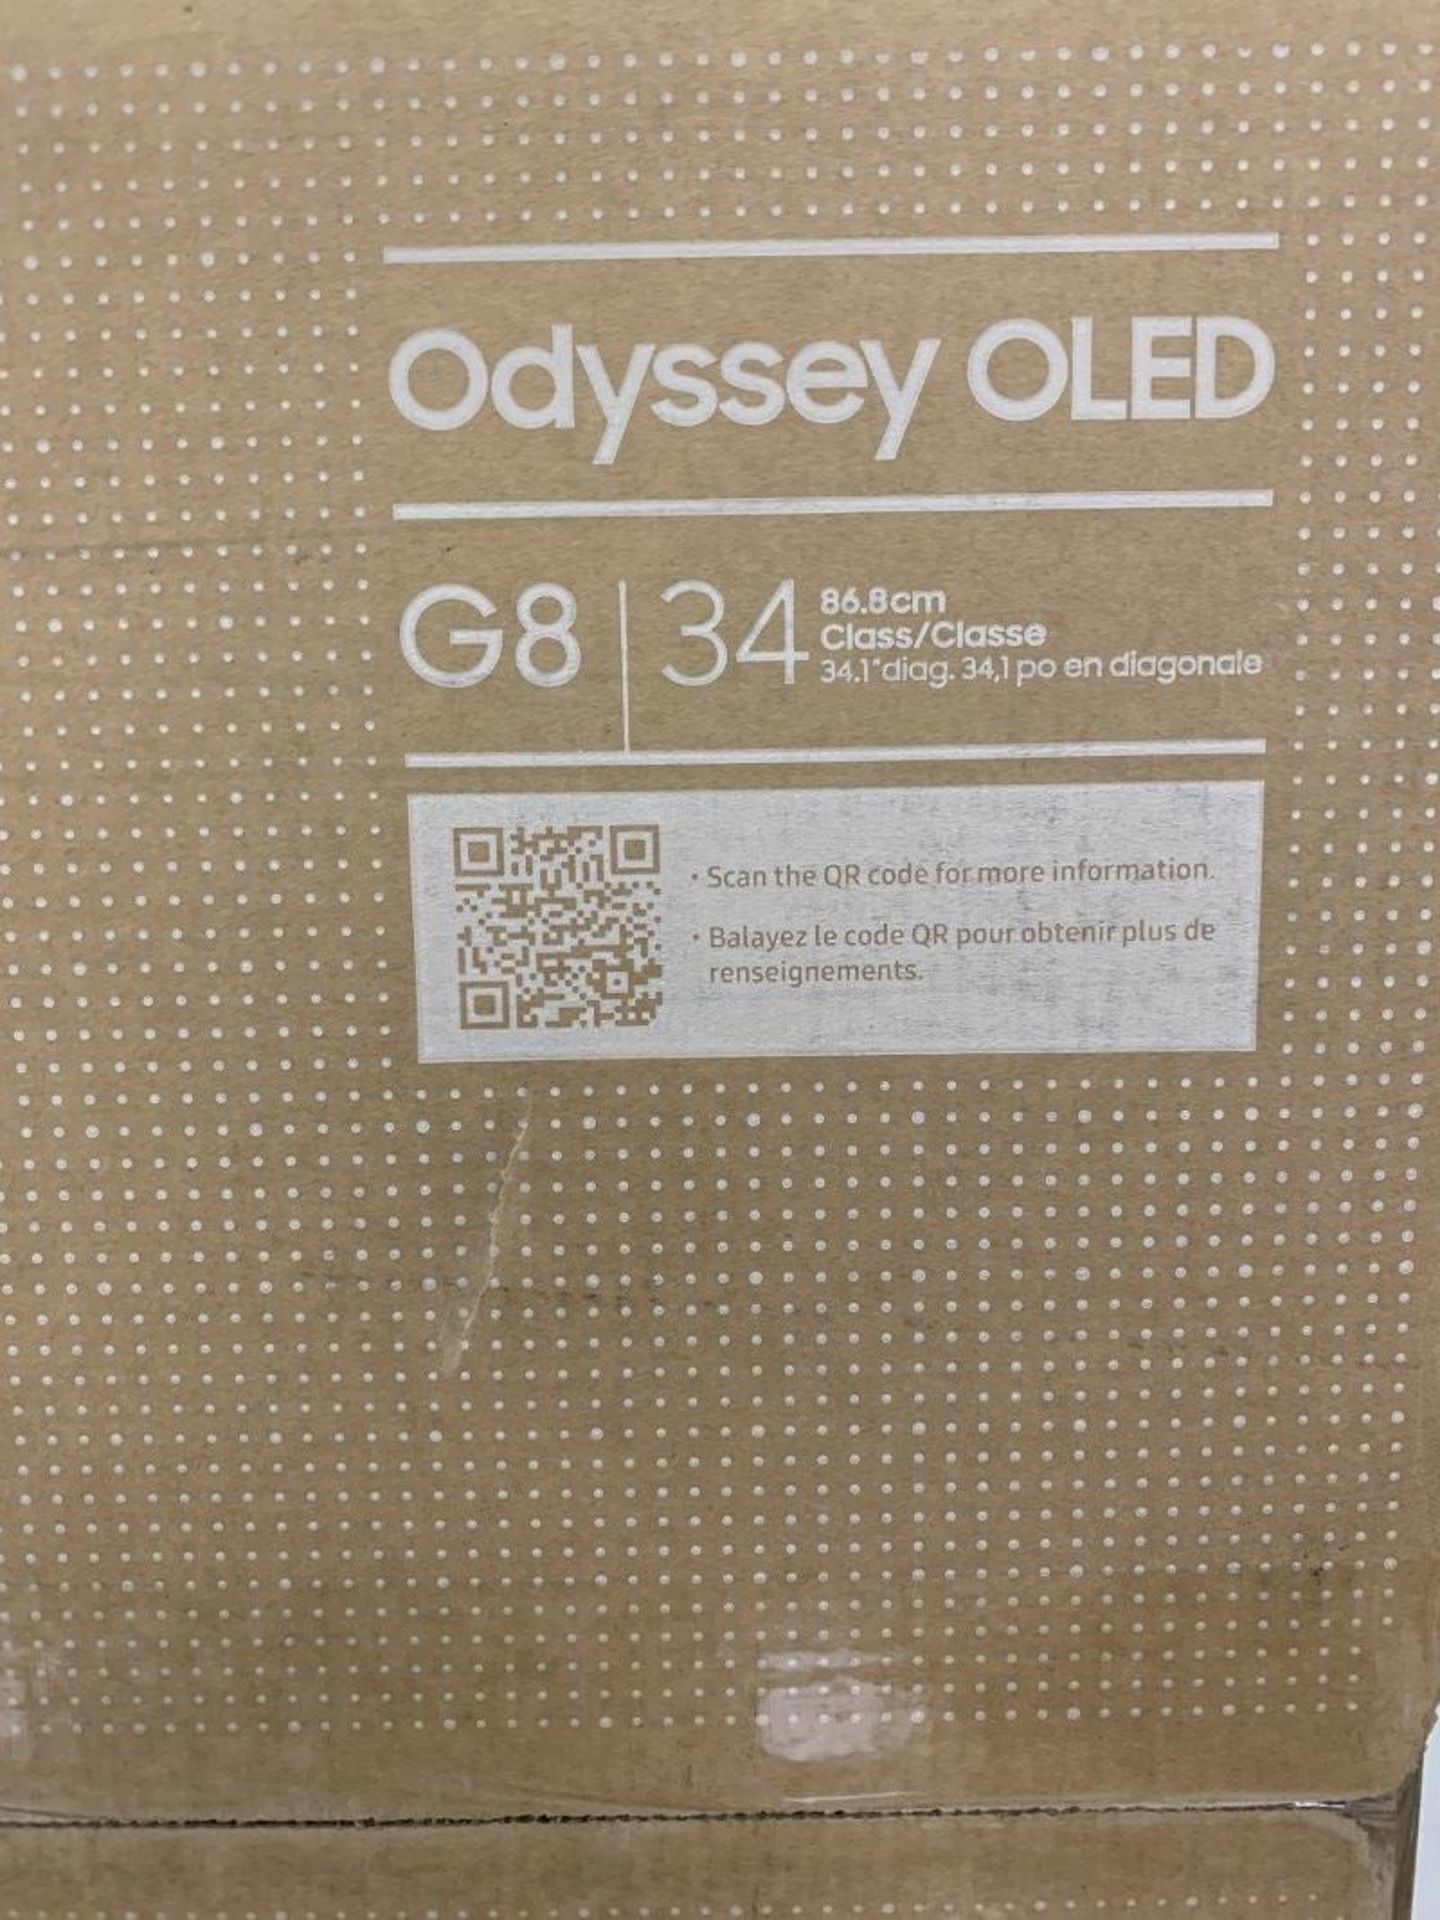 Samsung - Odyssey Oled - 34" G8 Gaming Monitor - Image 2 of 2